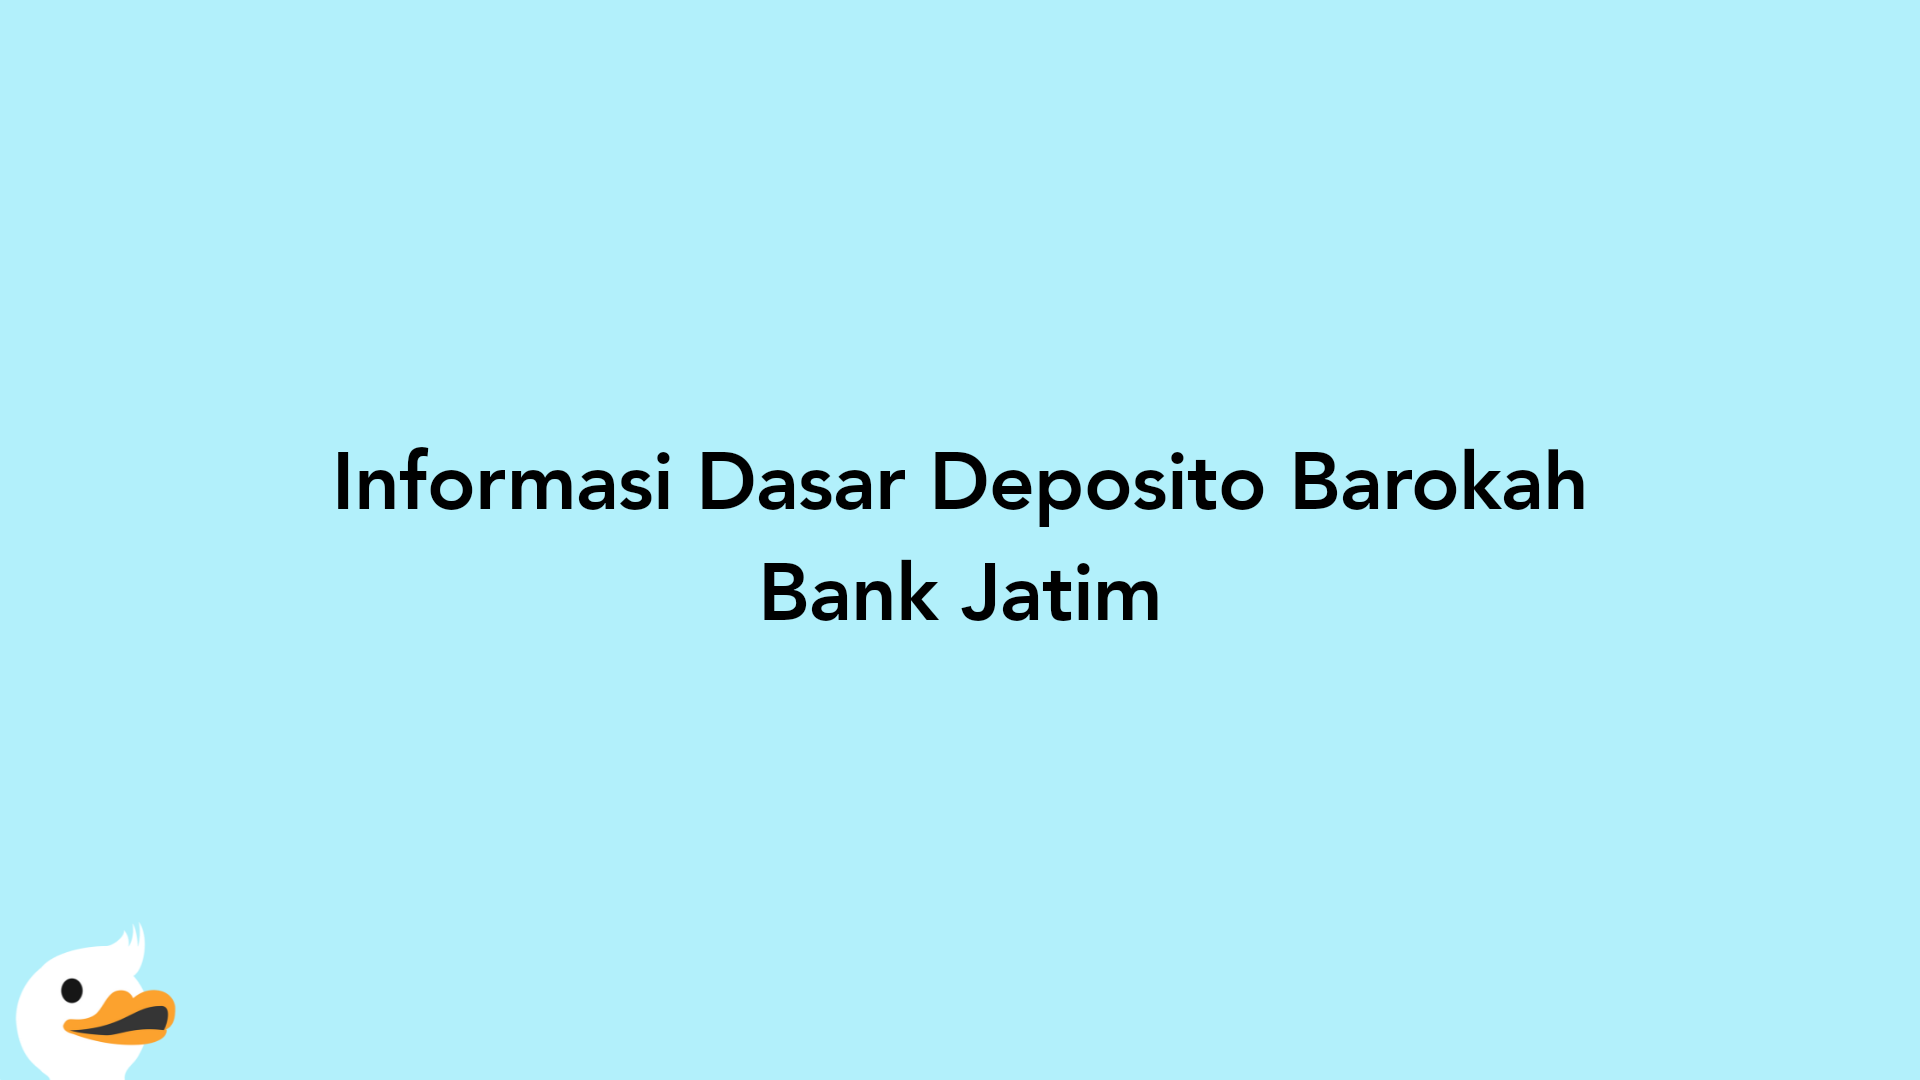 Informasi Dasar Deposito Barokah Bank Jatim